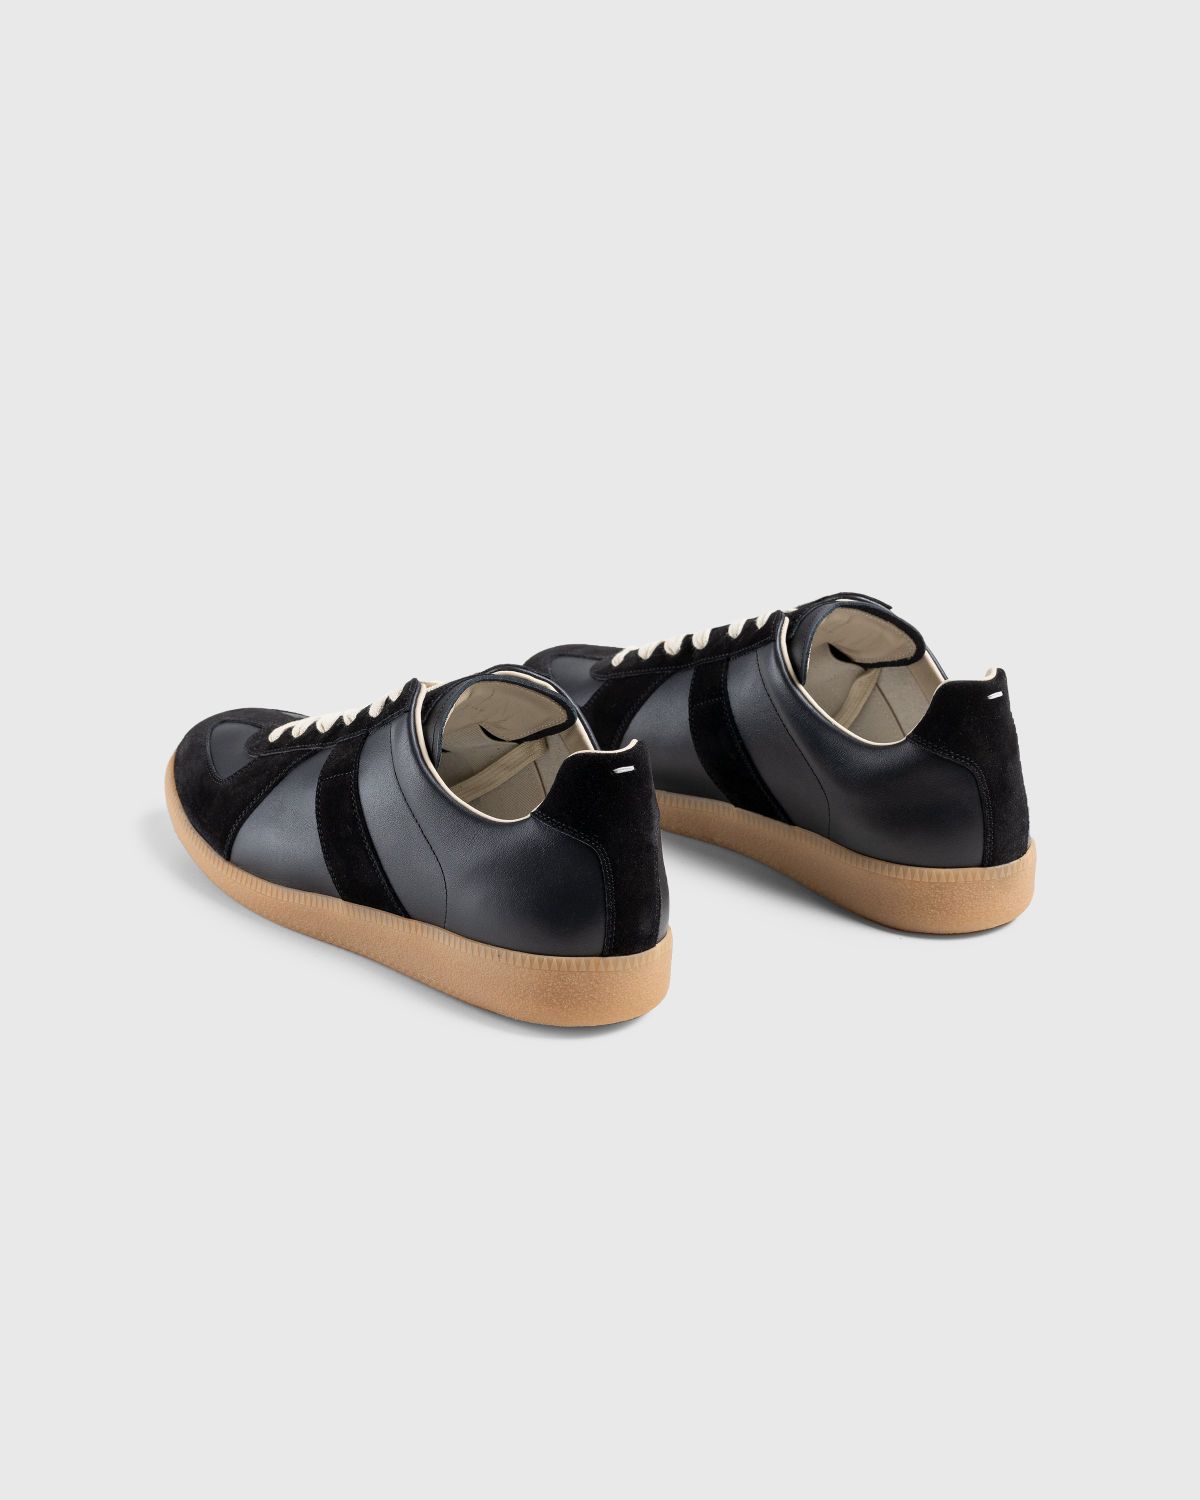 Maison Margiela – Leather Replica Sneakers Black - Low Top Sneakers - Black - Image 4